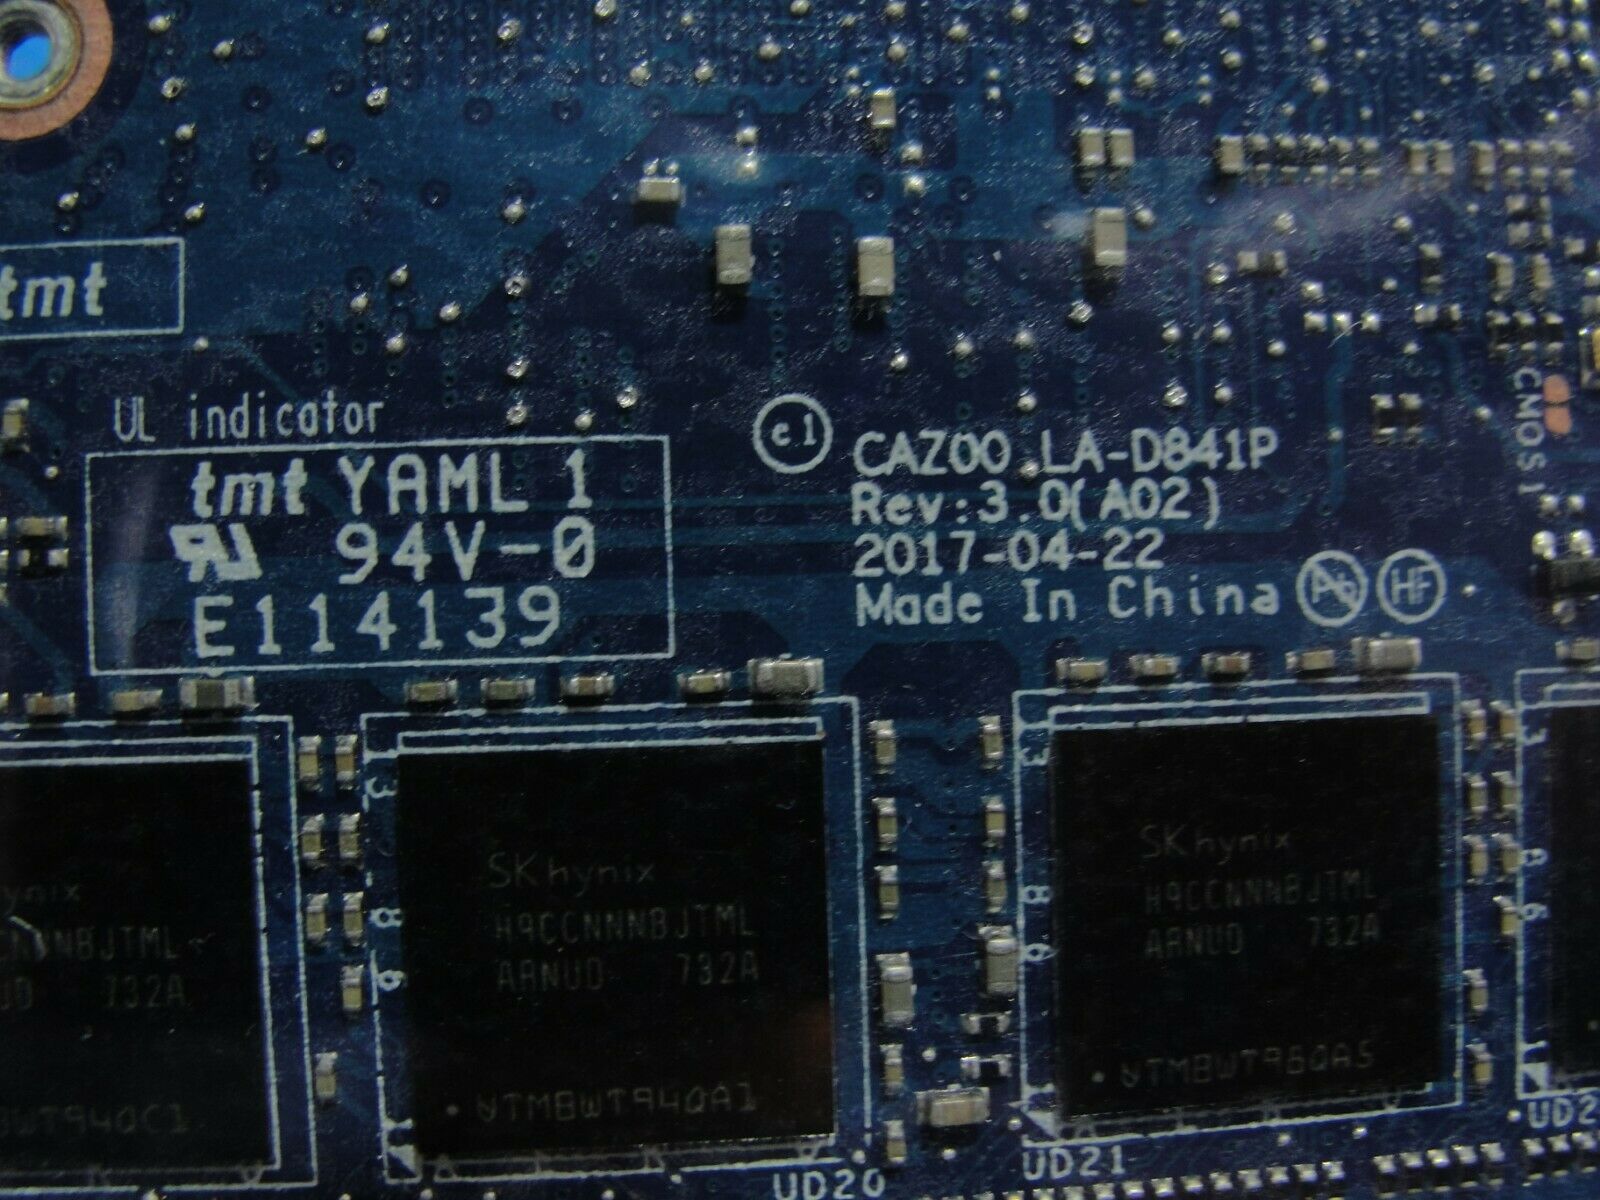 Dell XPS 13 9360 OEM i5-7200U 2.5GHz 8GB Motherboard 4N87K LA-D841P BAD GPU Unknown